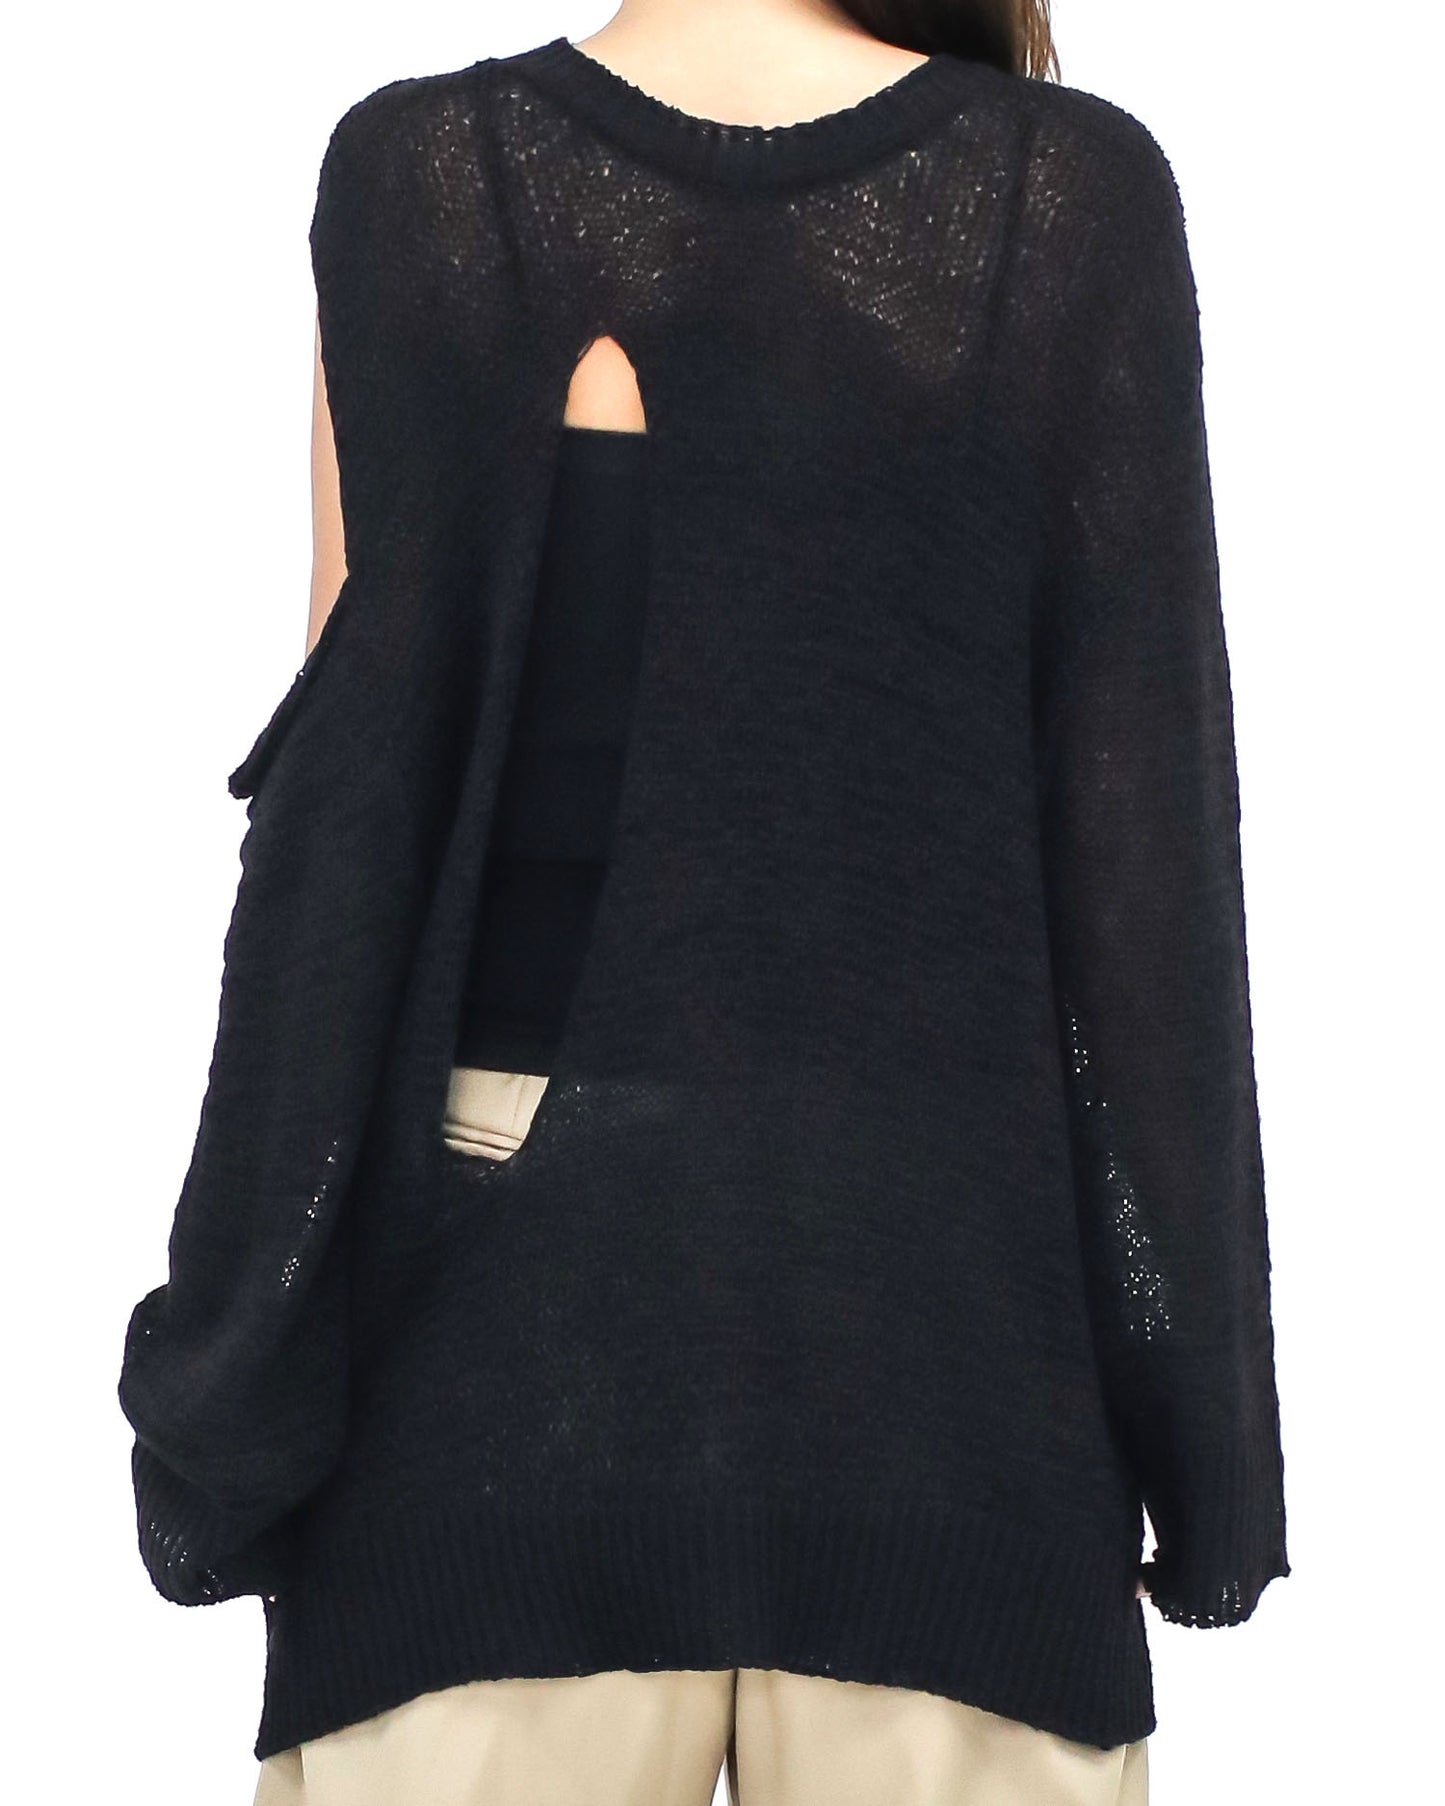 black cutout shoulder & back soft knitted top *pre-order*